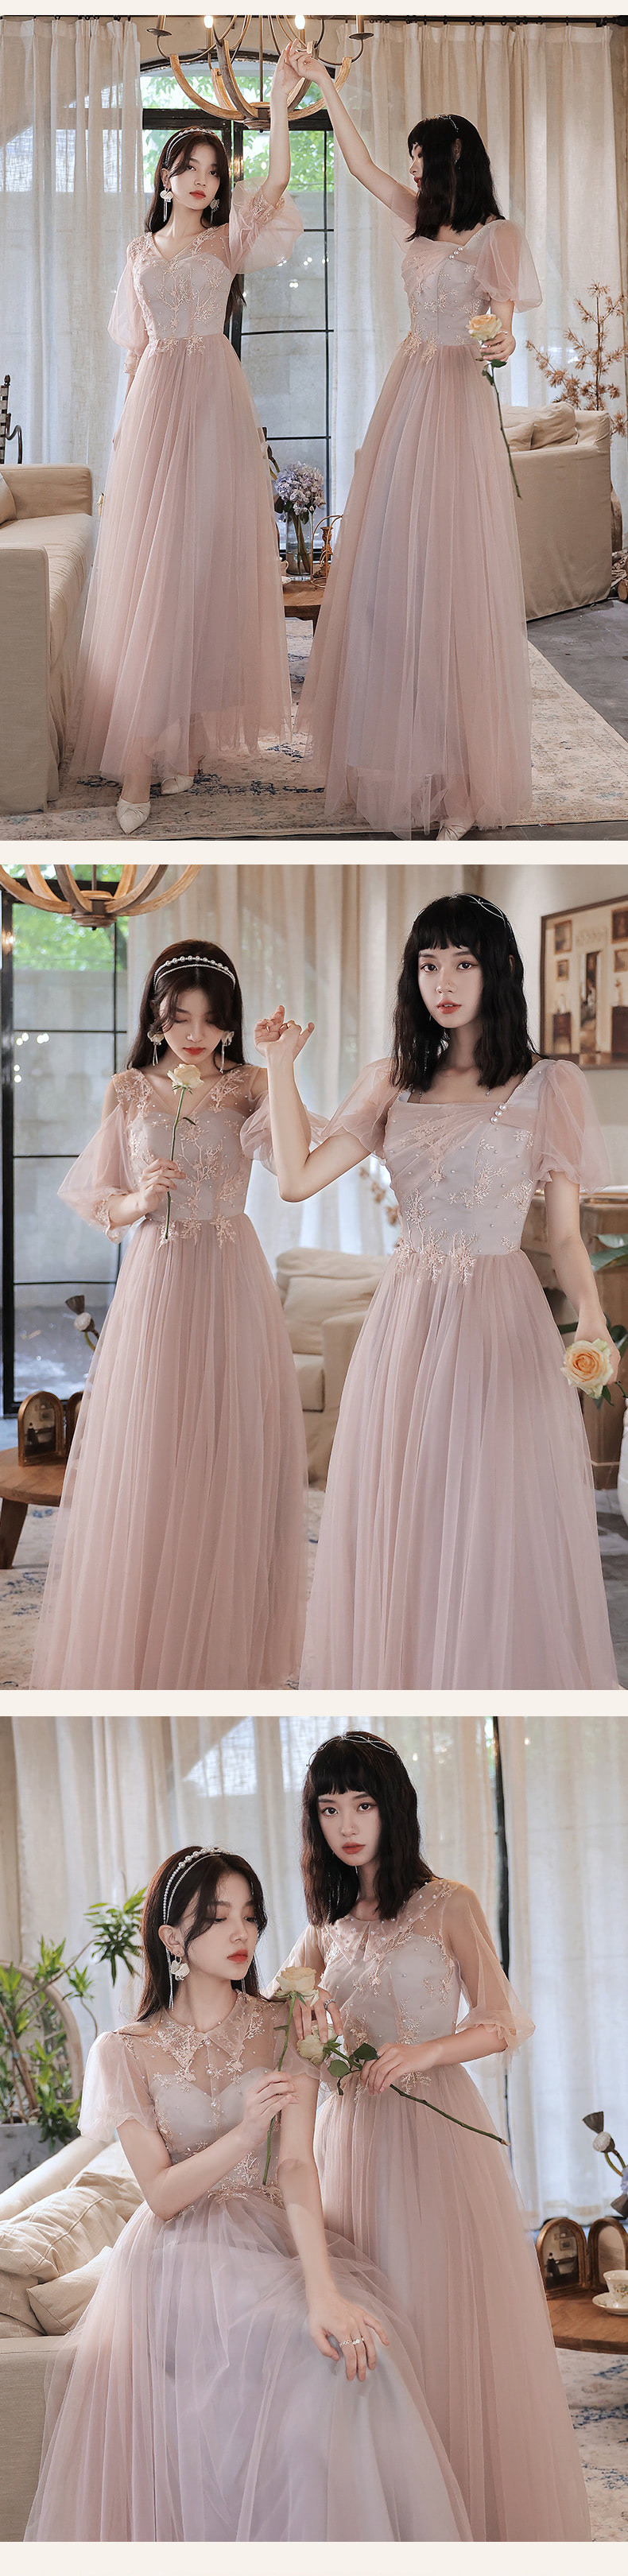 Pink-Tulle-Formal-Bridesmaid-Wedding-Party-Maxi-Dress17.jpg